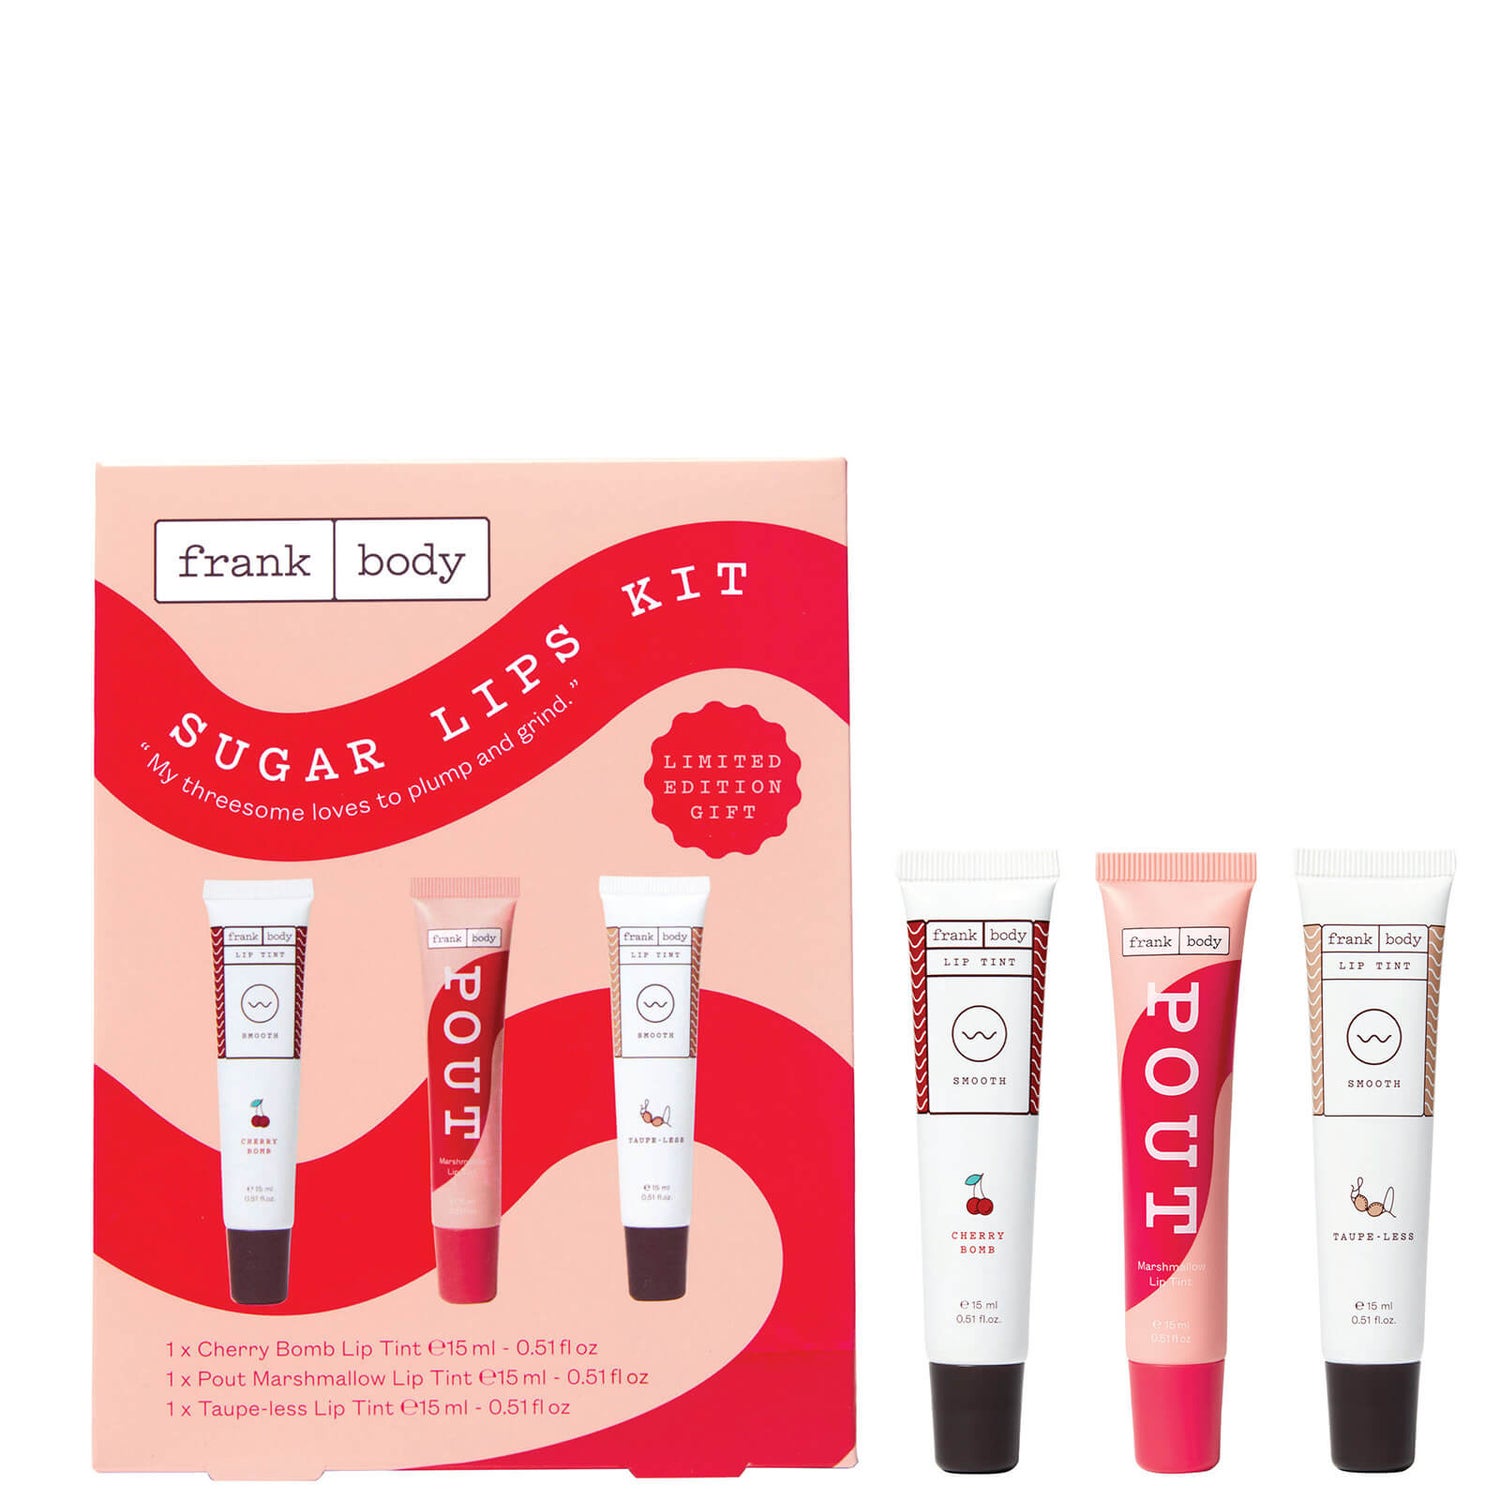 Franks Body Sugar Lips Kit